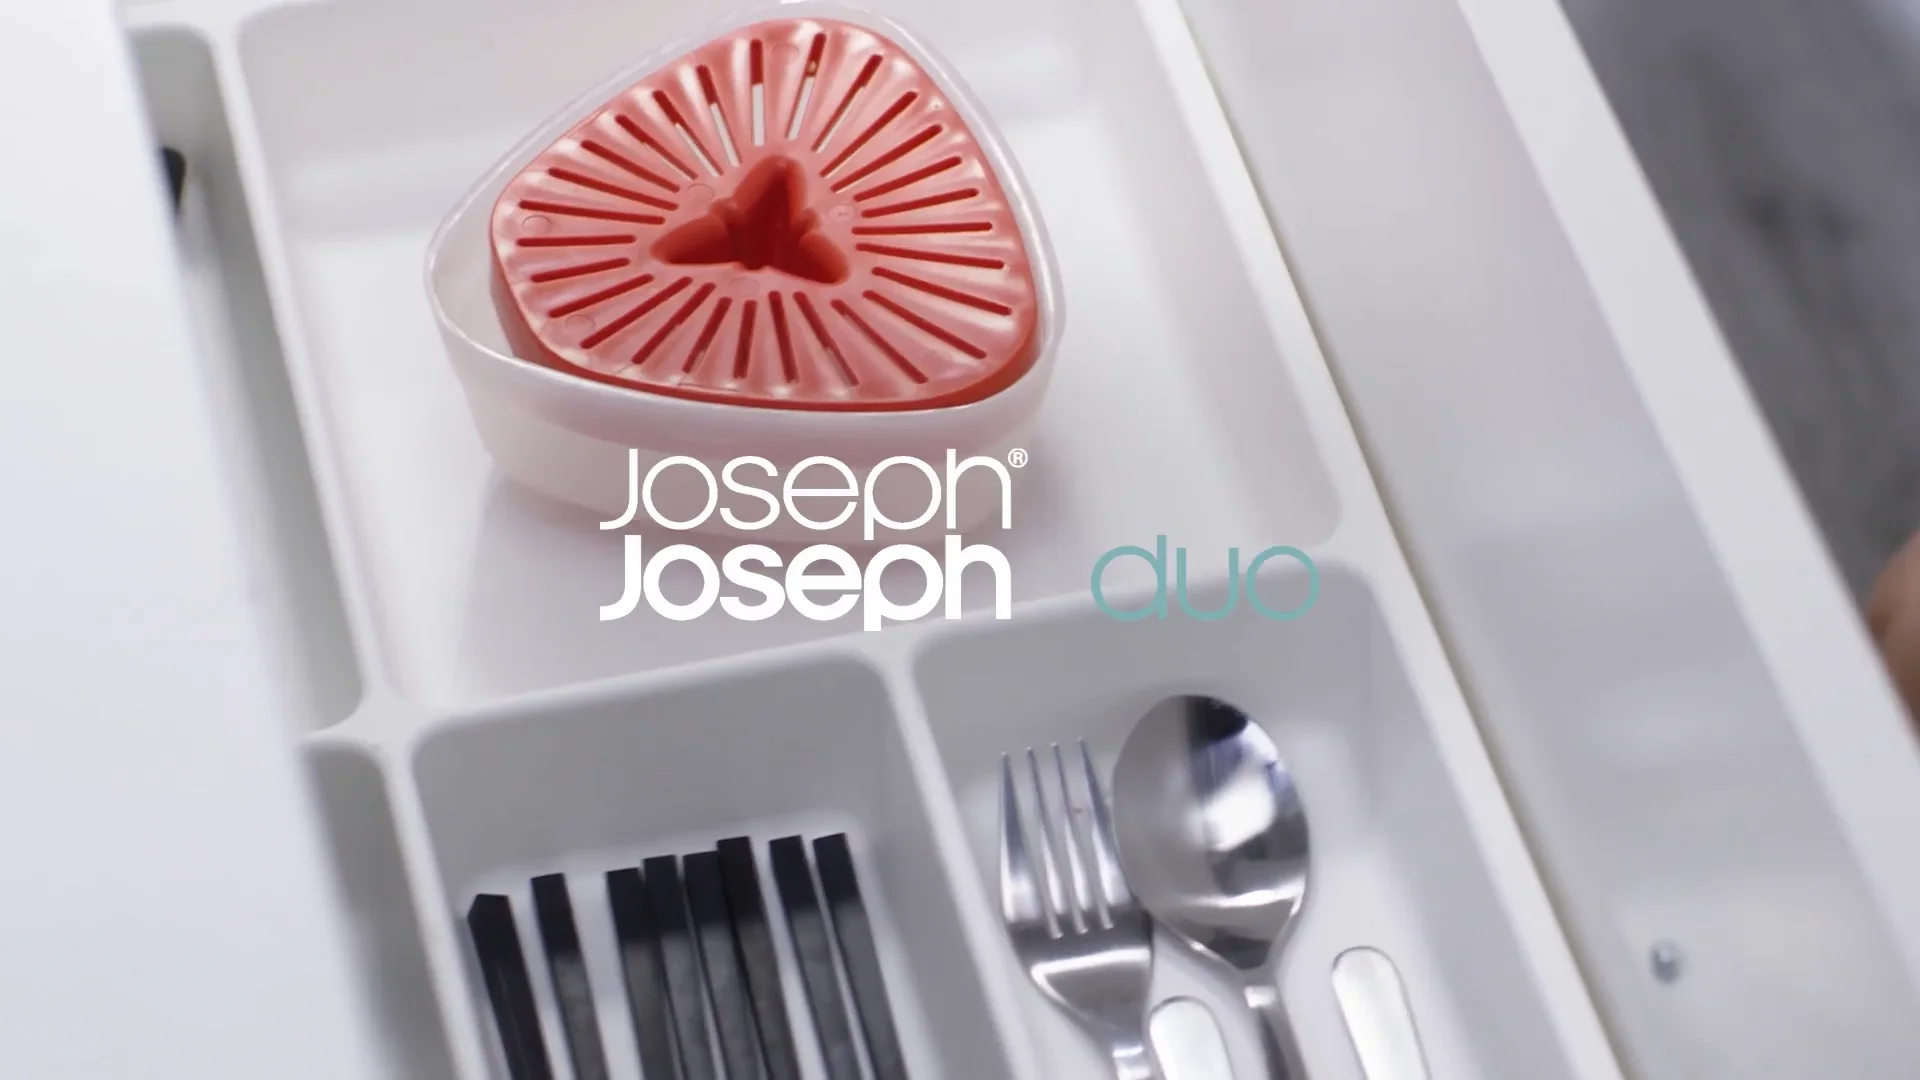 Joseph Joseph Duo Soap Dispenser